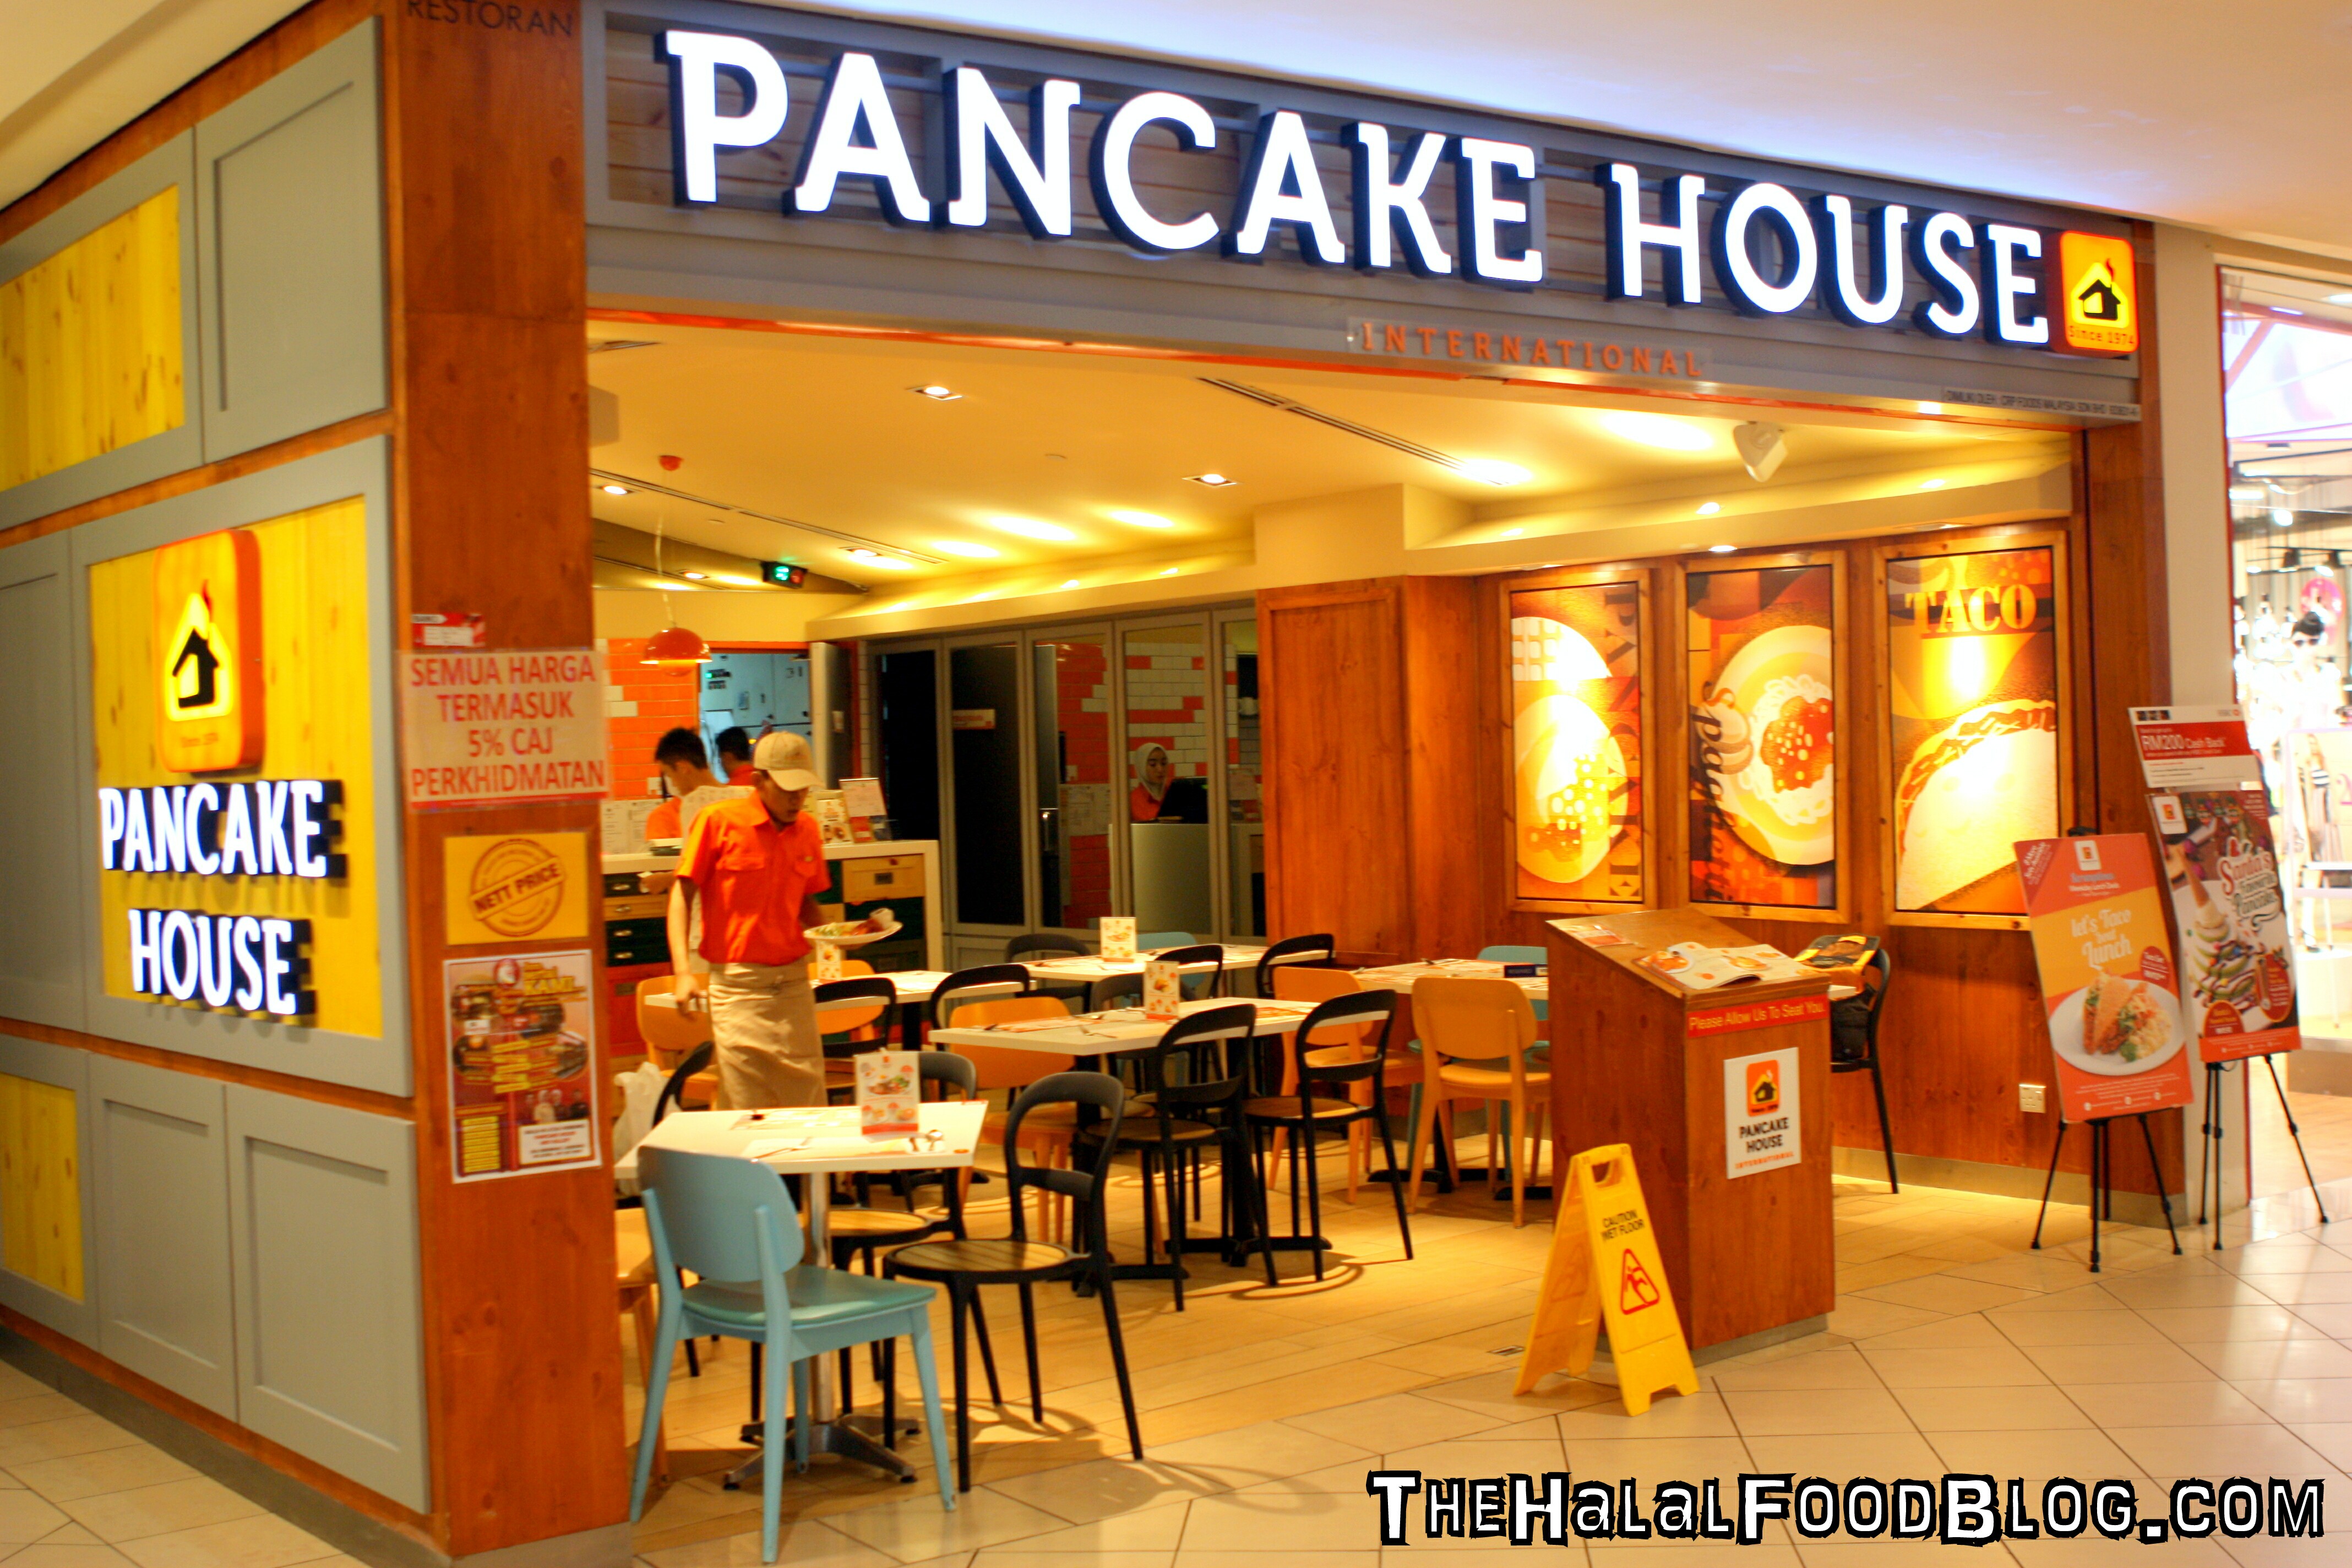 Pancake house btc